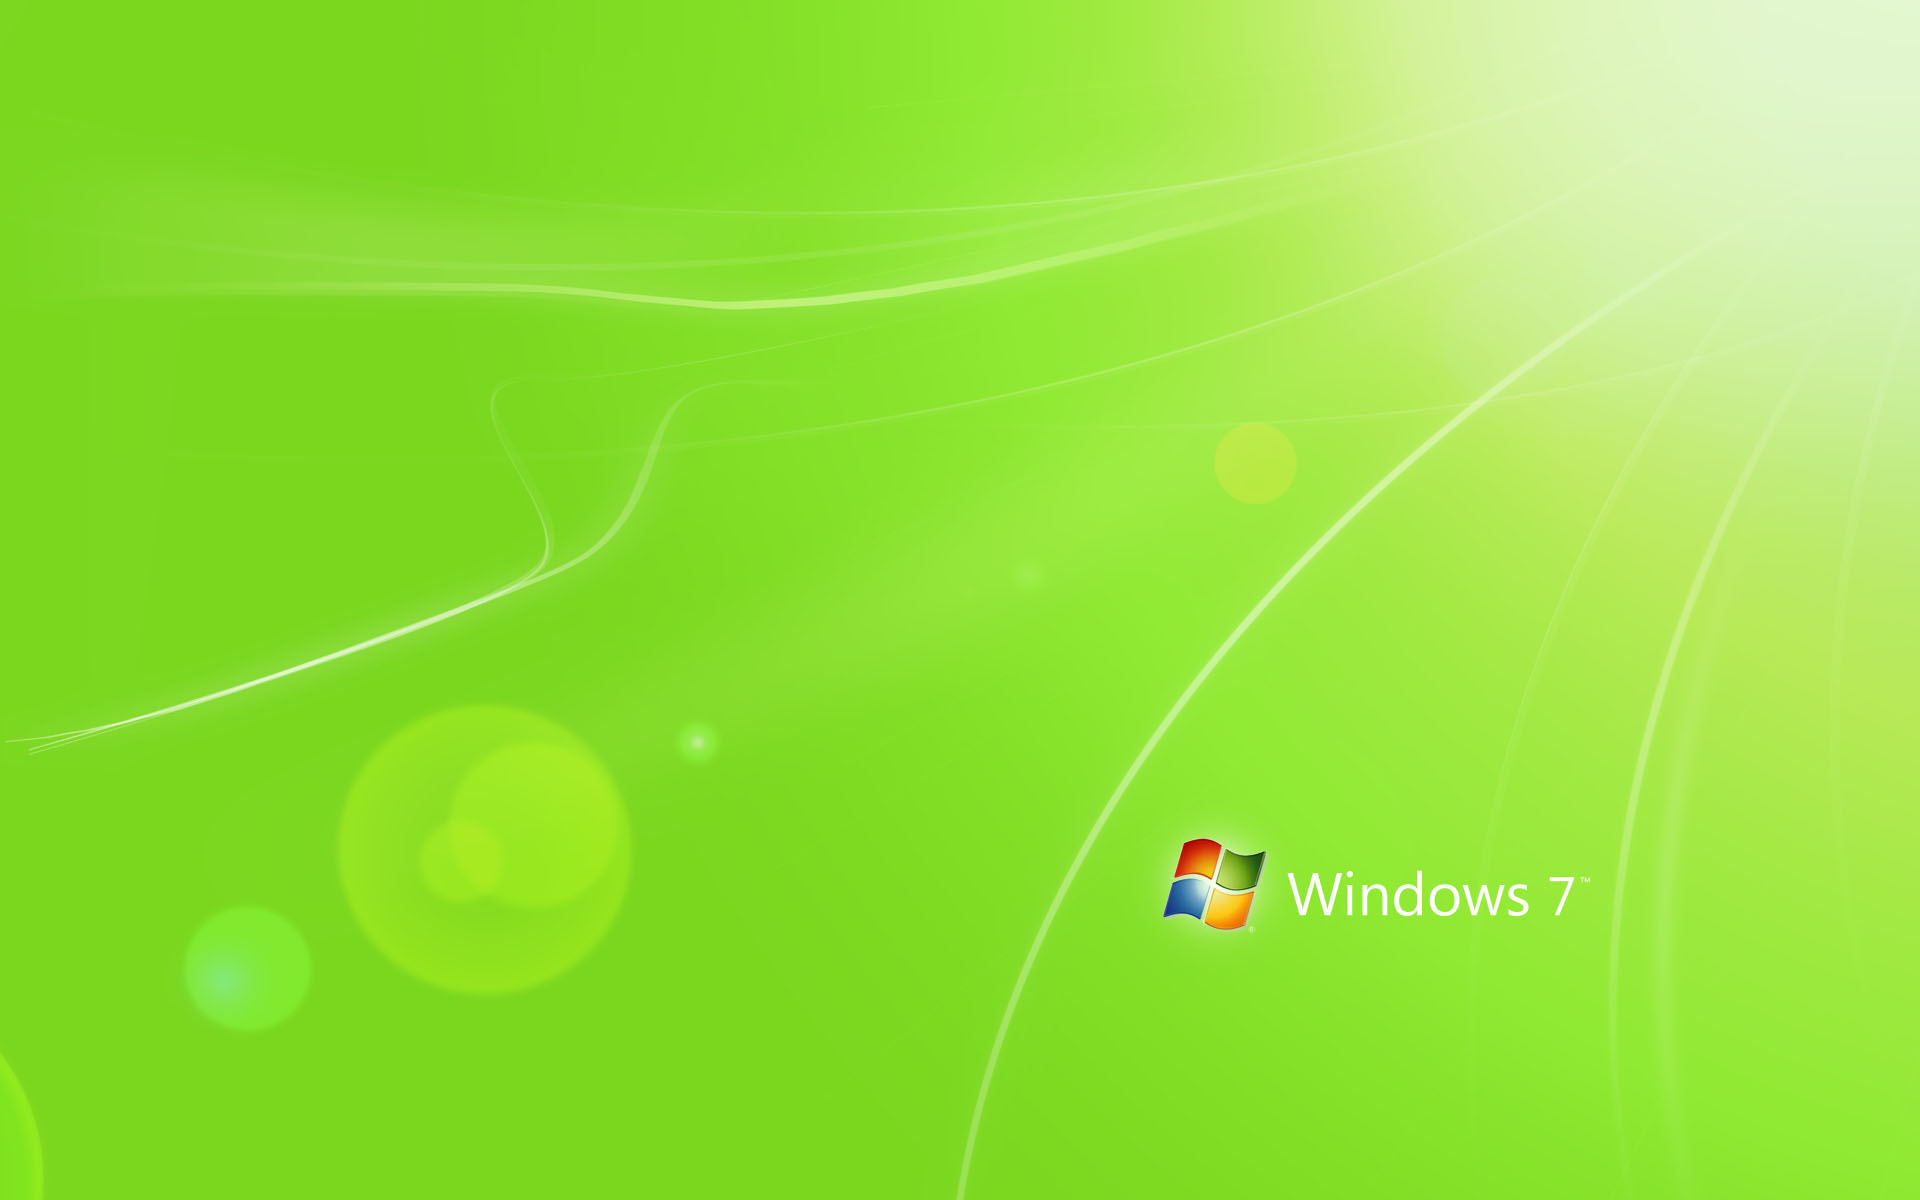 Windows 7 lime theme desktop wallpaper pictures Windows 7 lime theme